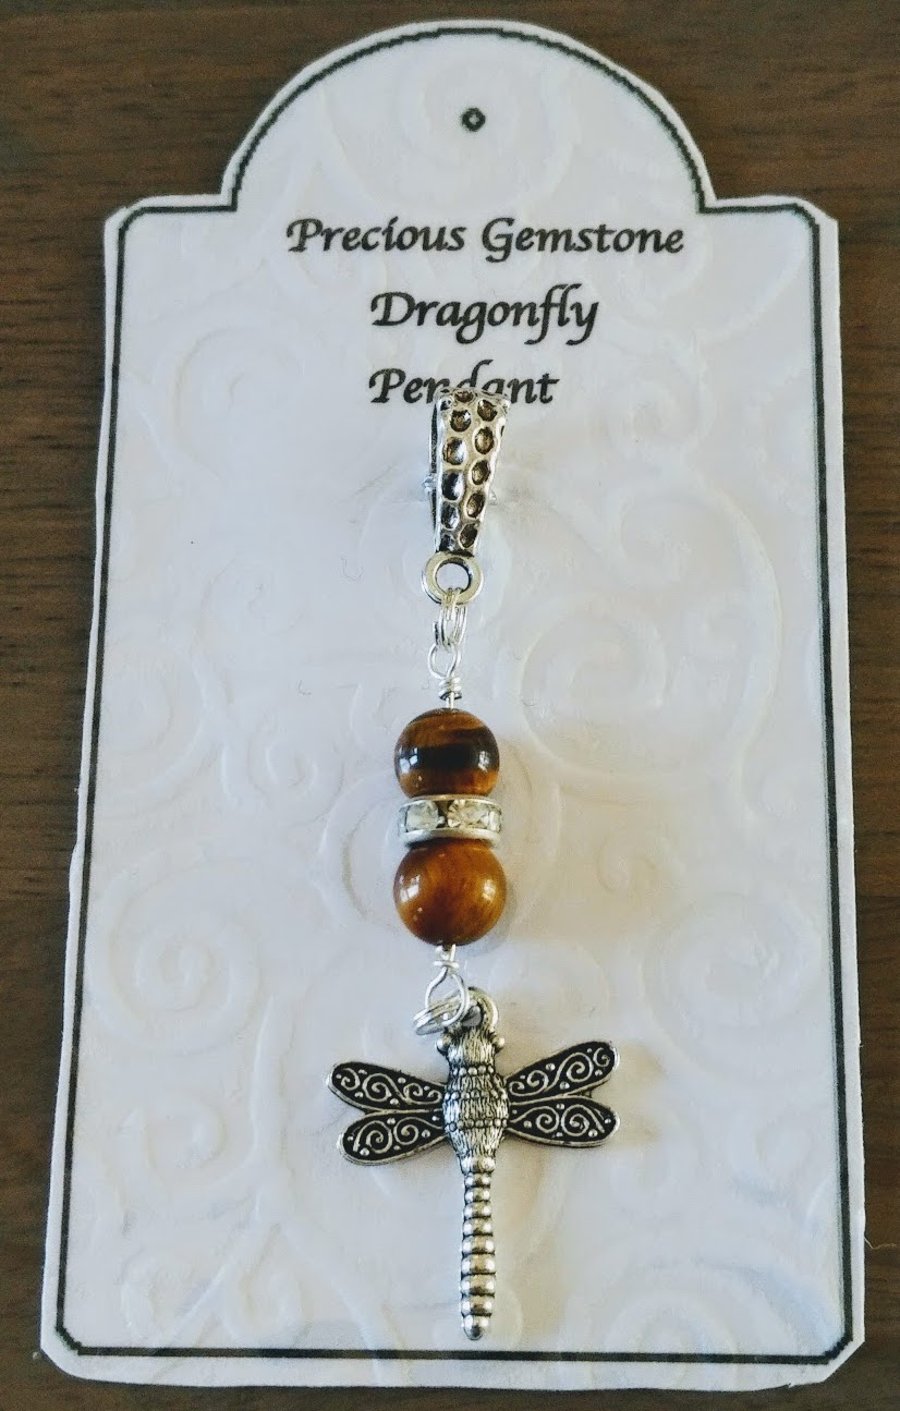 Dragonfly pendant with tiger eye gemstones